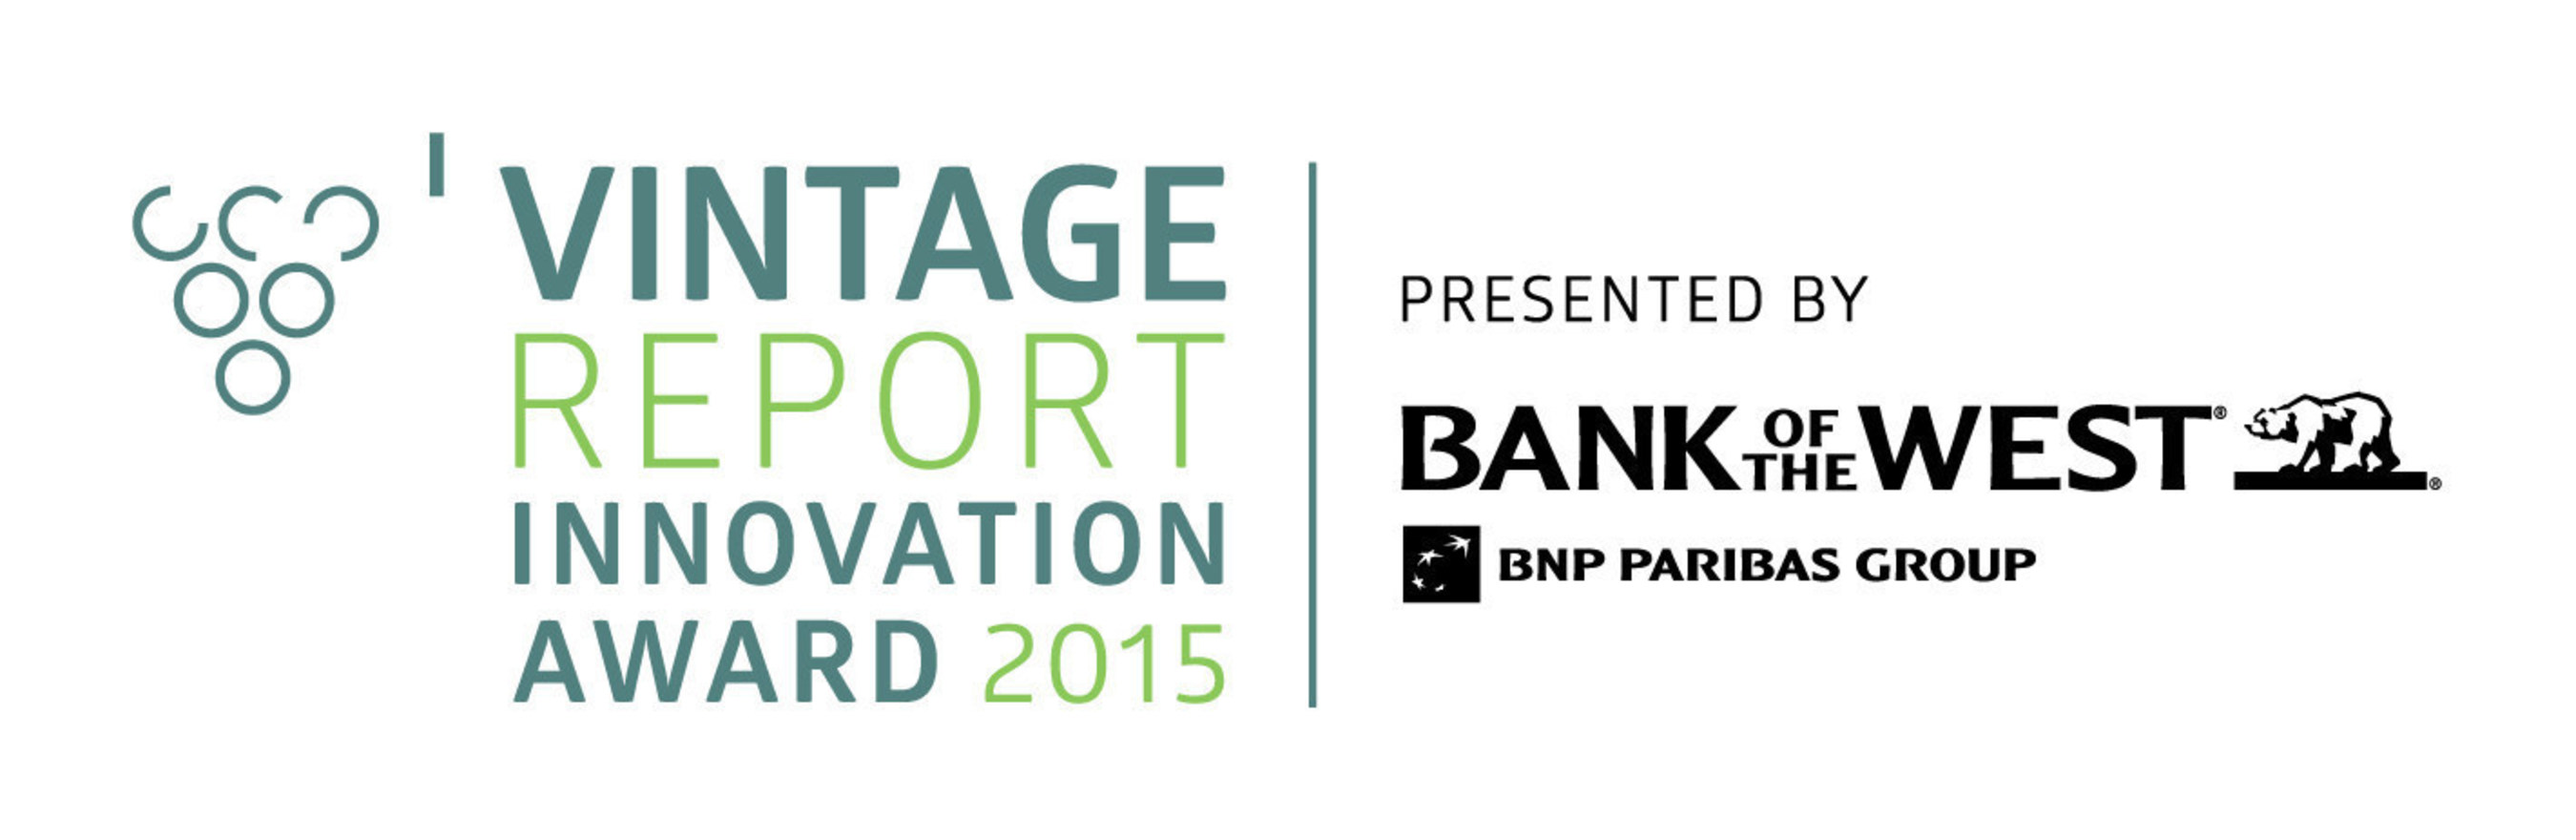 2015 Vintage Report Innovation Award